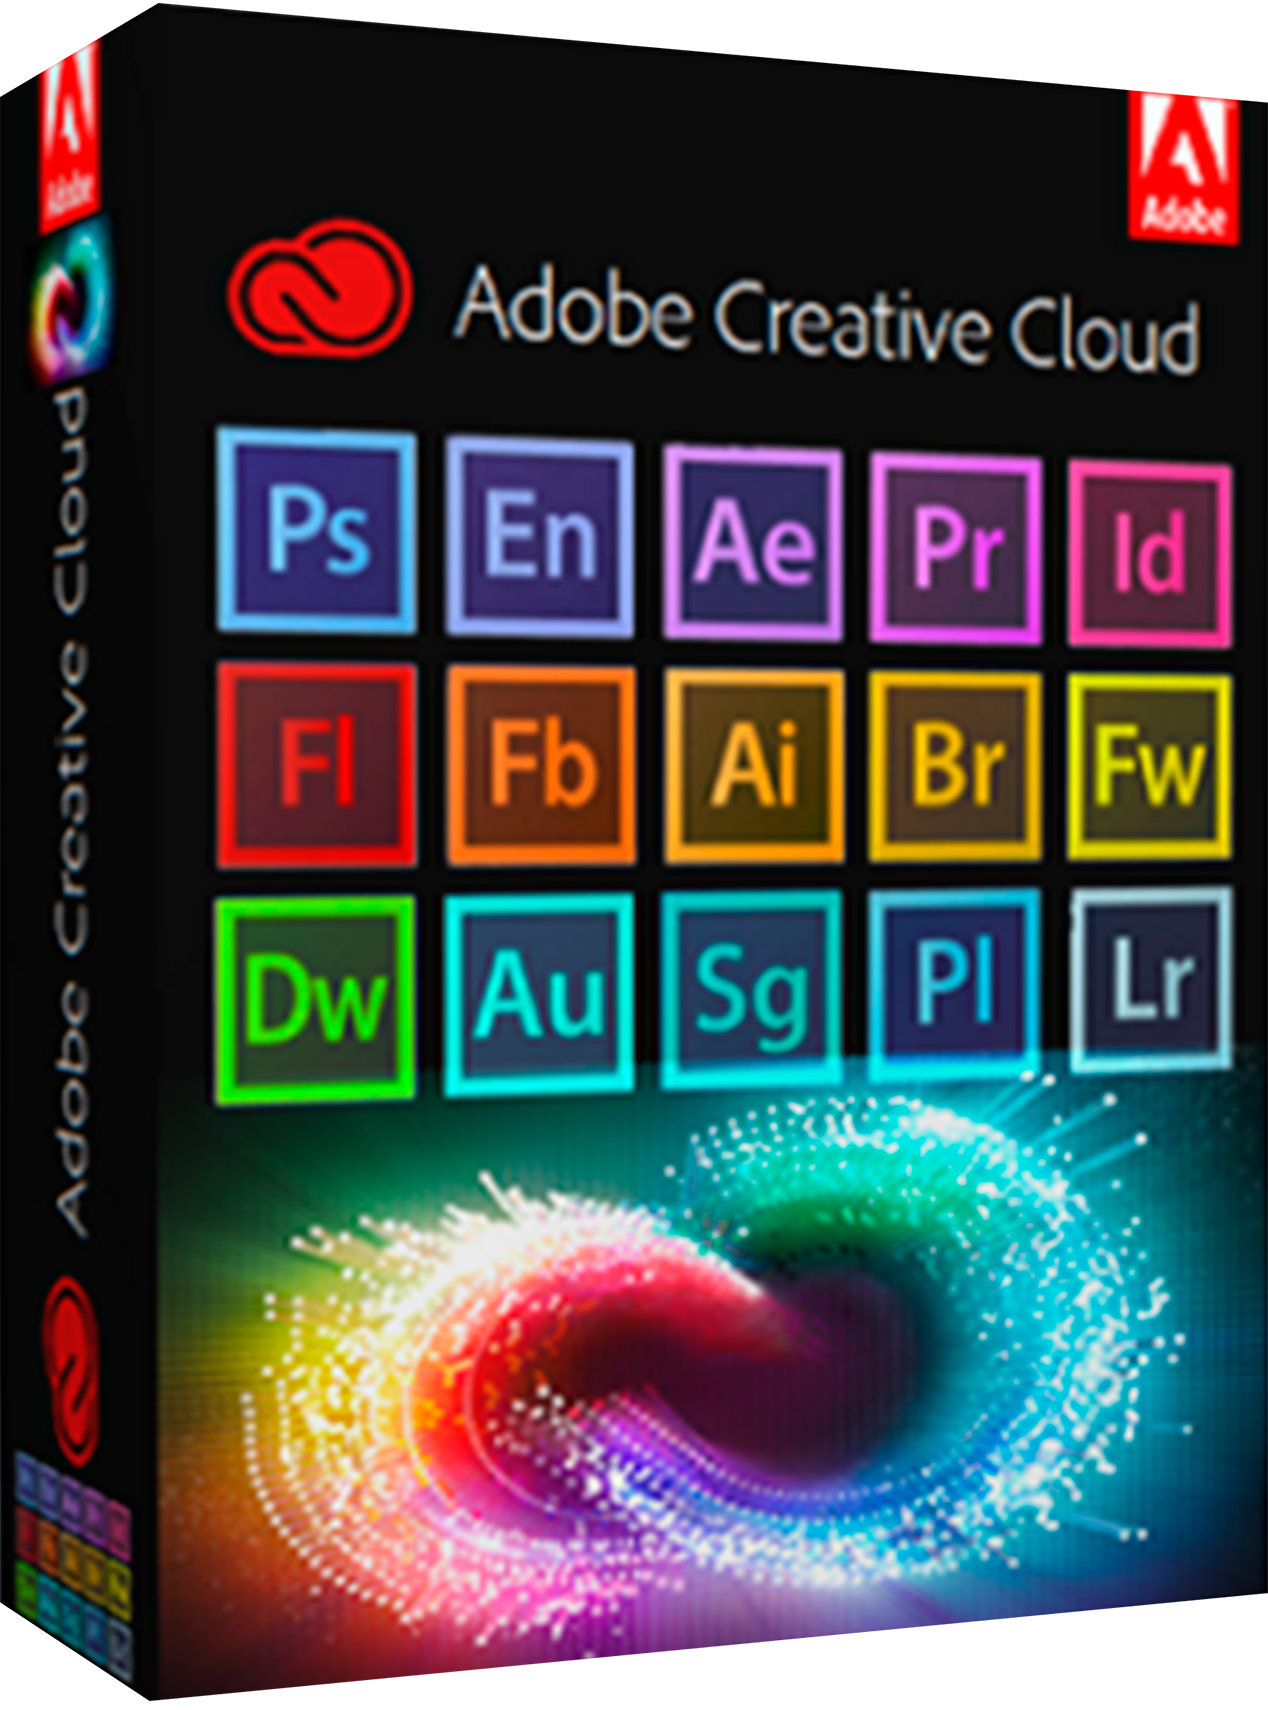 adobe creative cloud desktop download